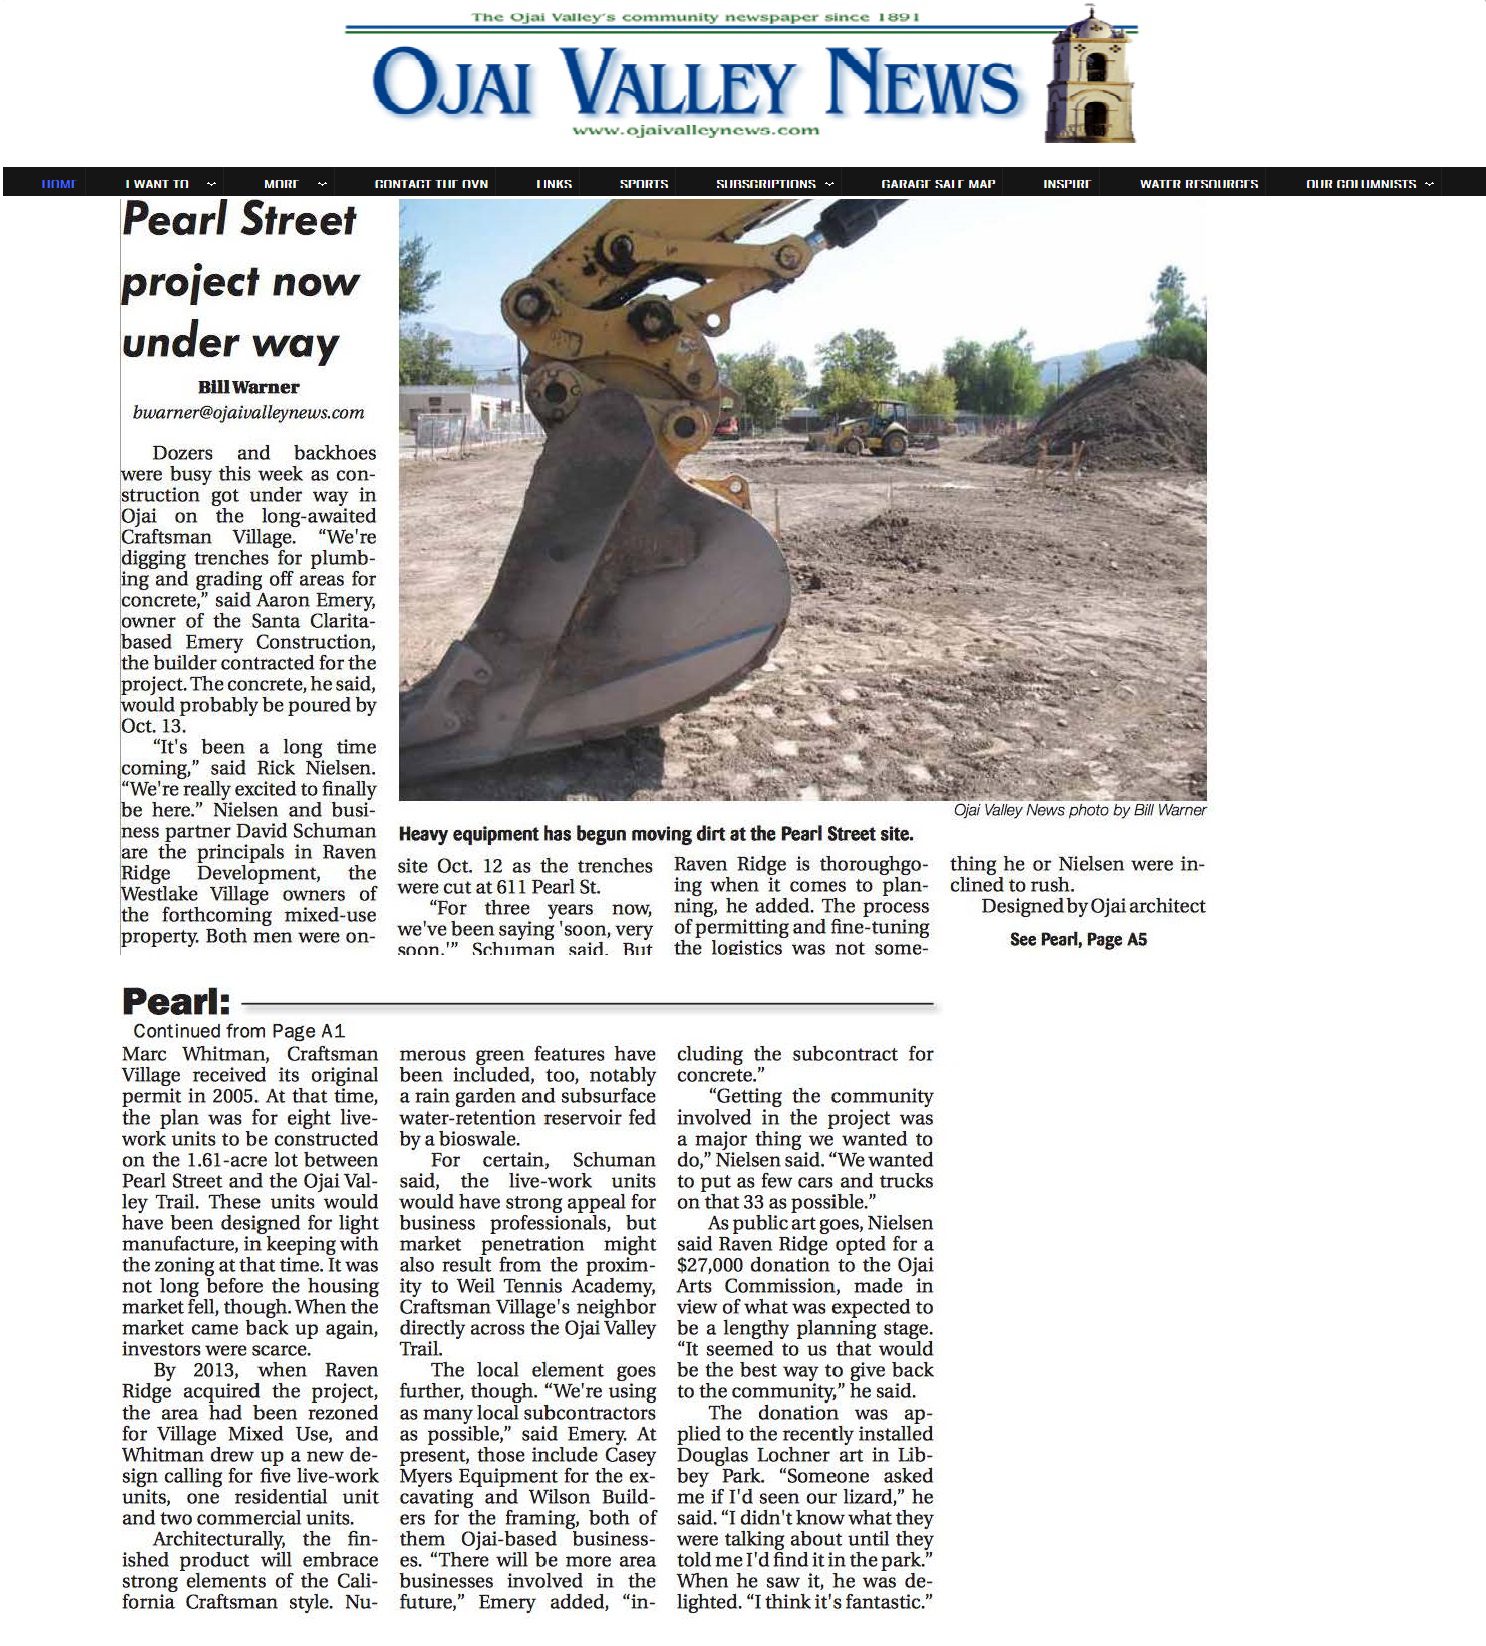 Ojai Valley News: Pearl Street Project Underway